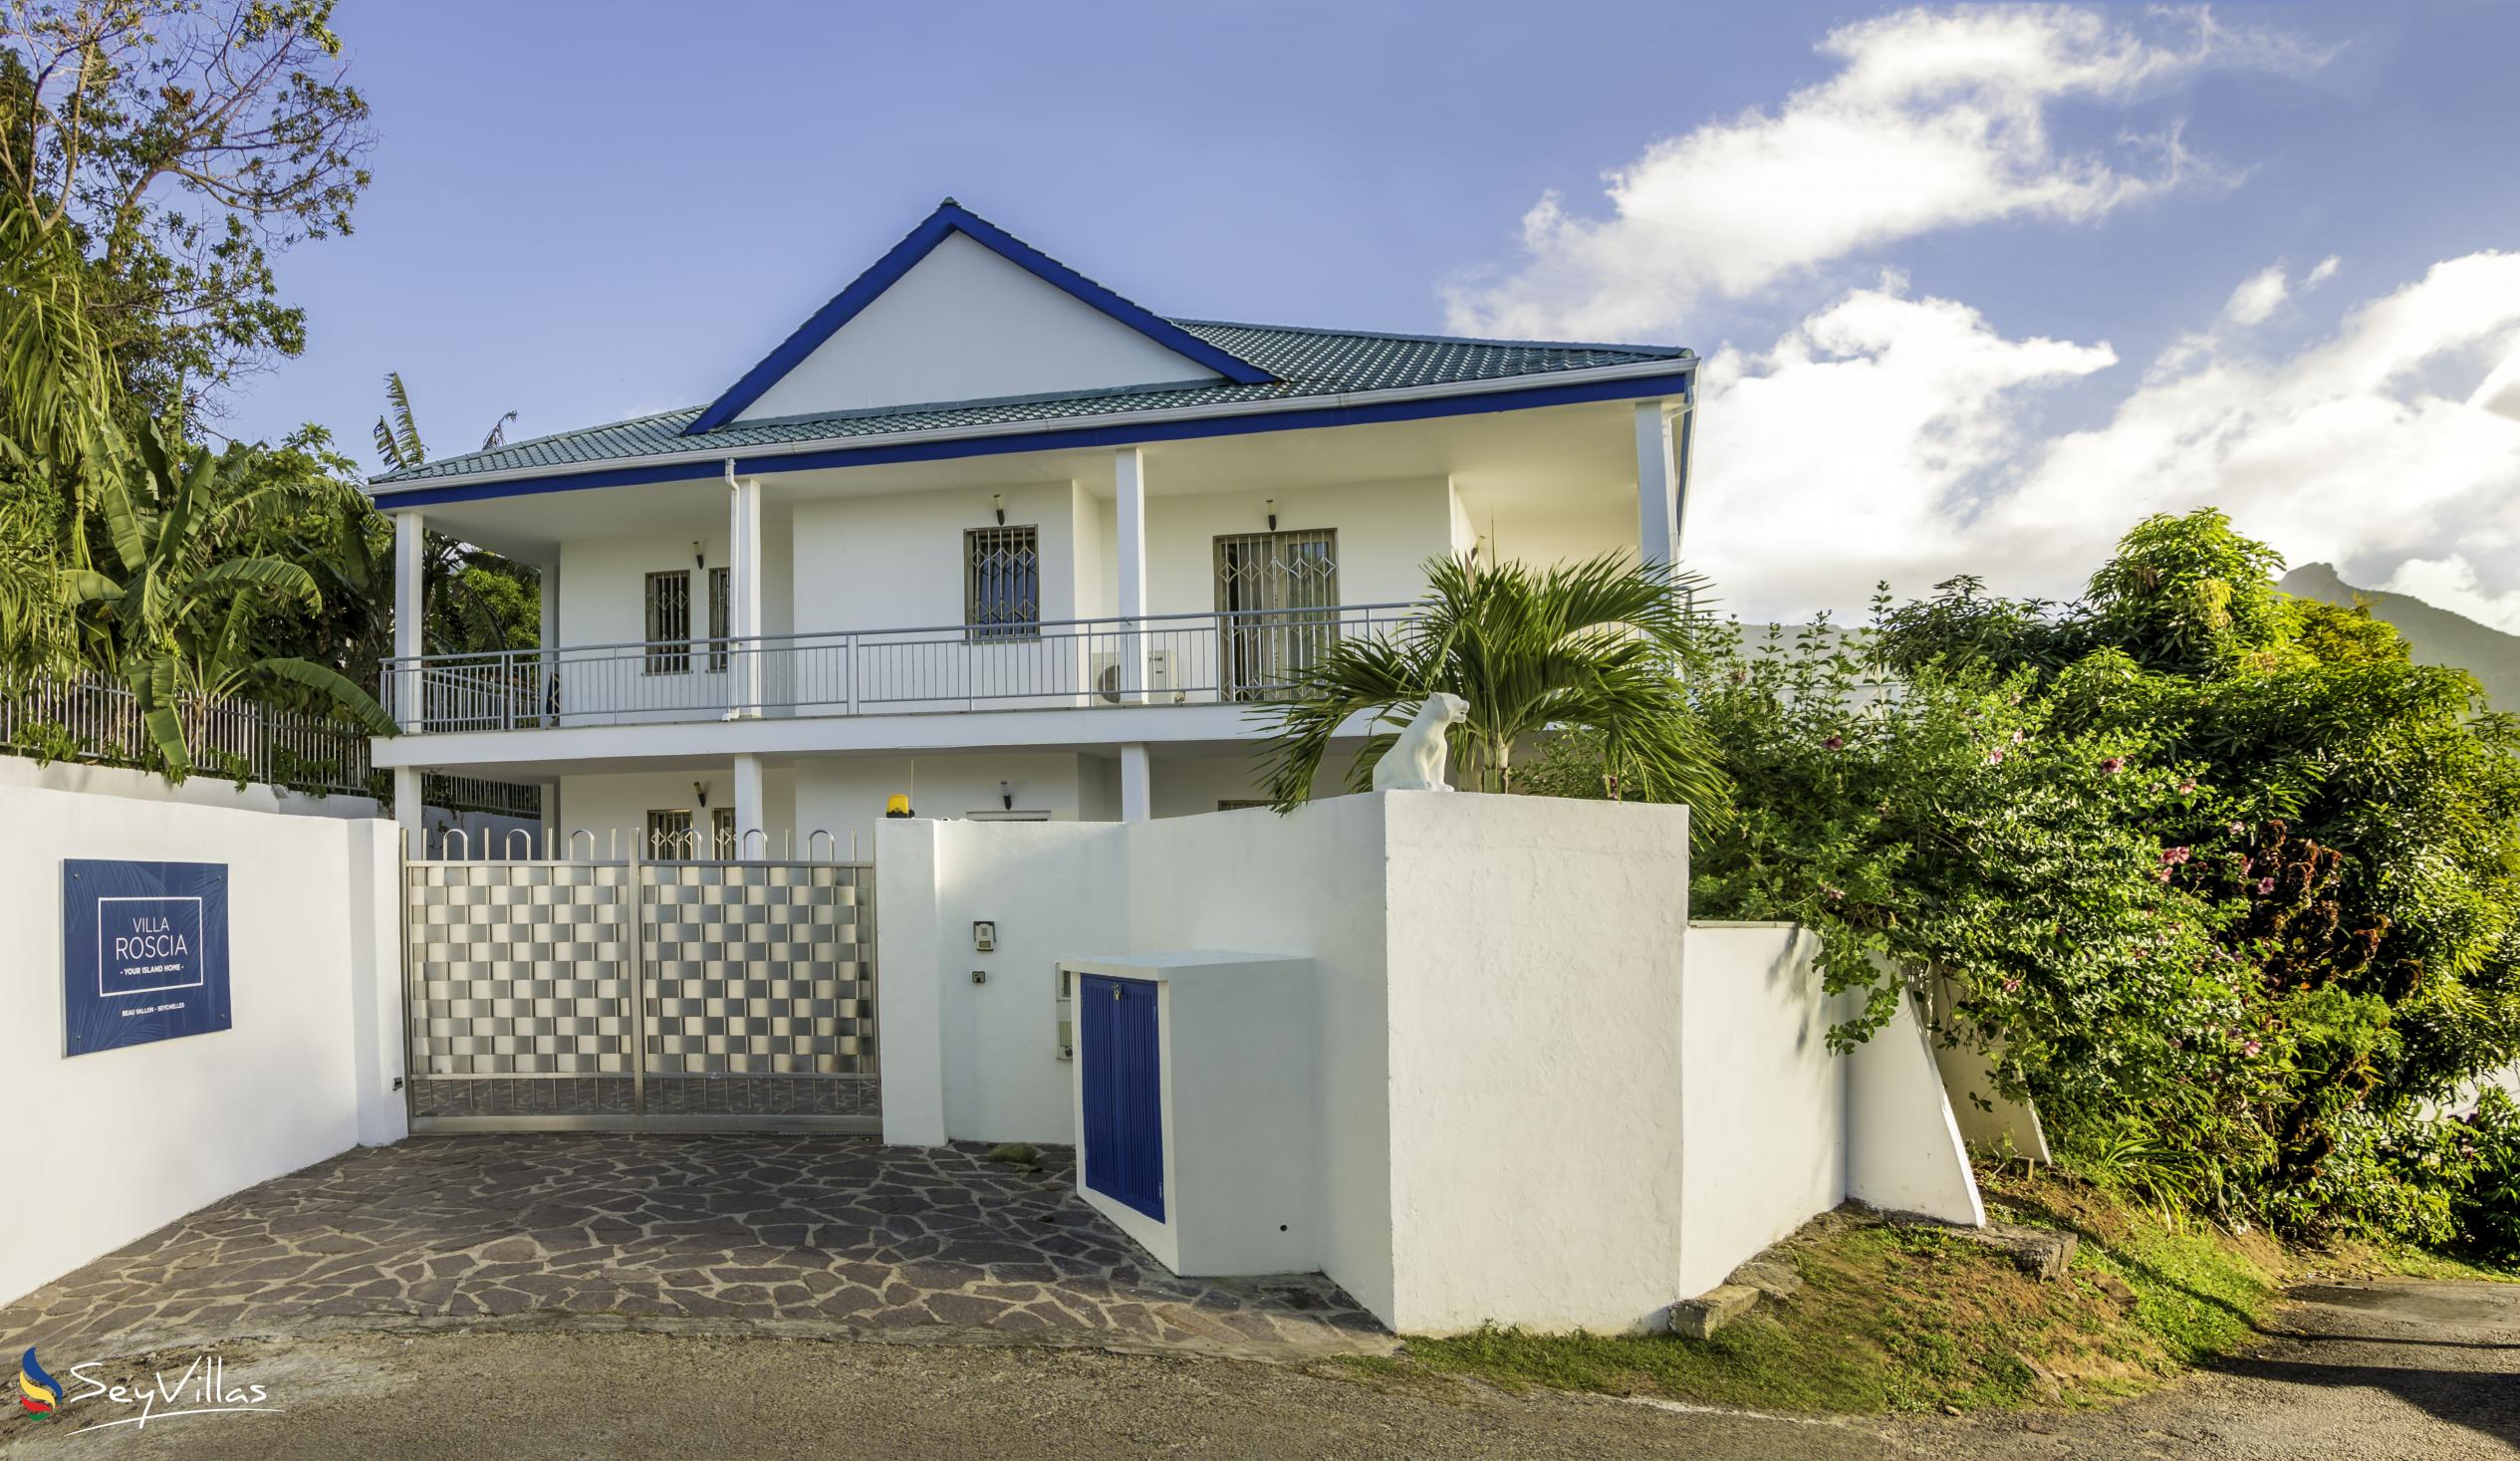 Foto 2: Villa Roscia - Aussenbereich - Mahé (Seychellen)